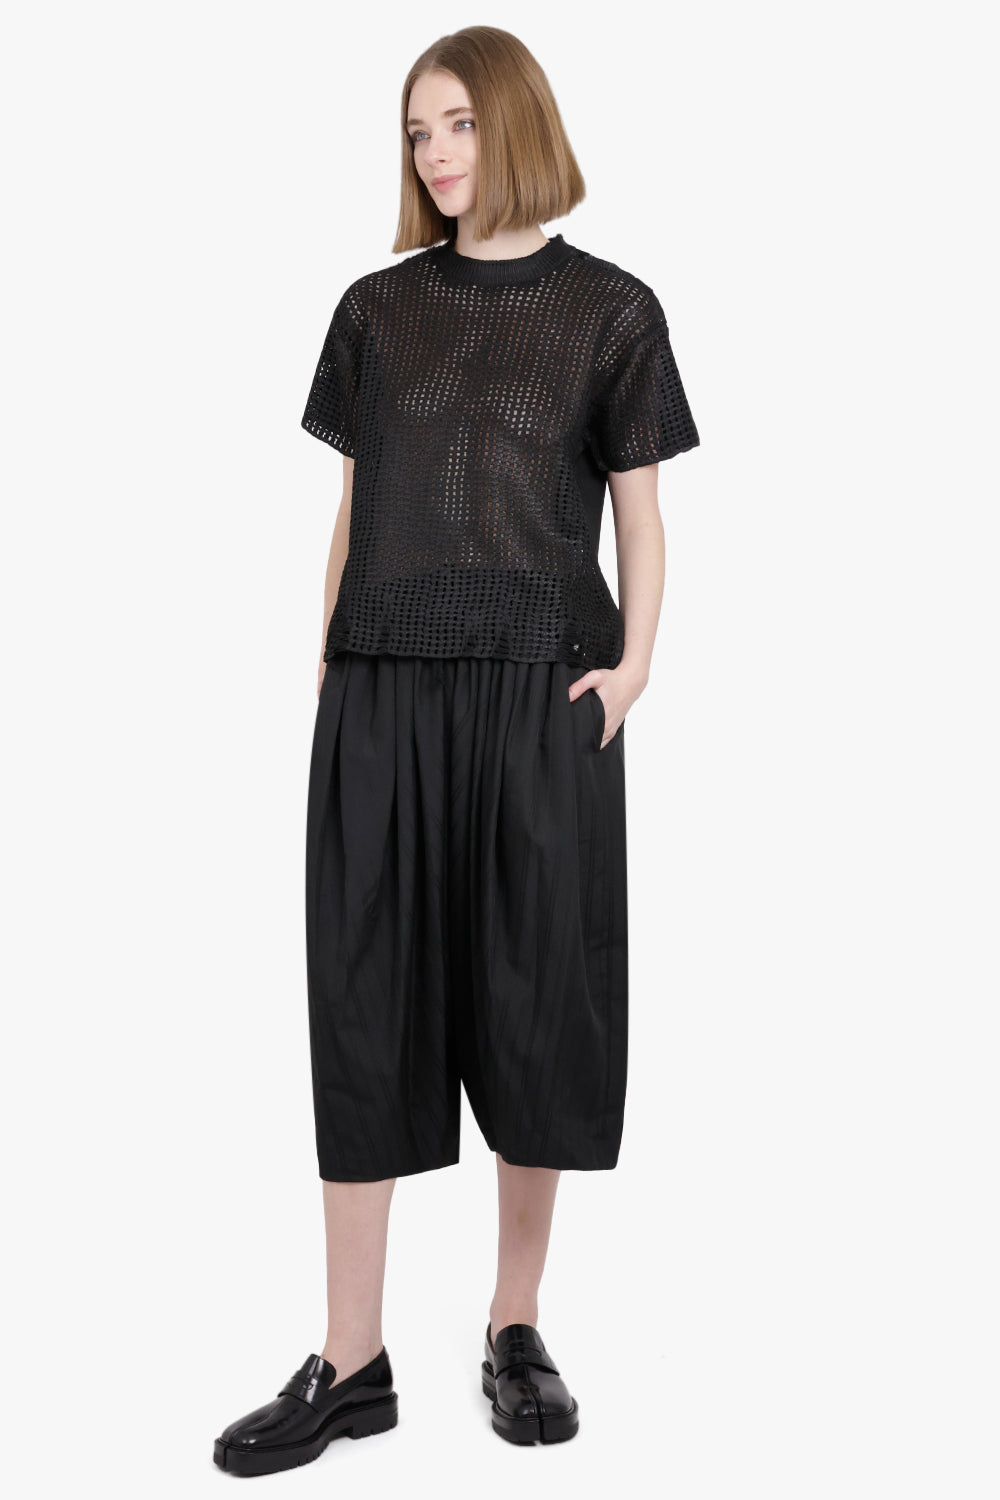 JUNYA WATANABE RTW Mesh Overlay S/S Distressed Knit T-Shirt Top | Black